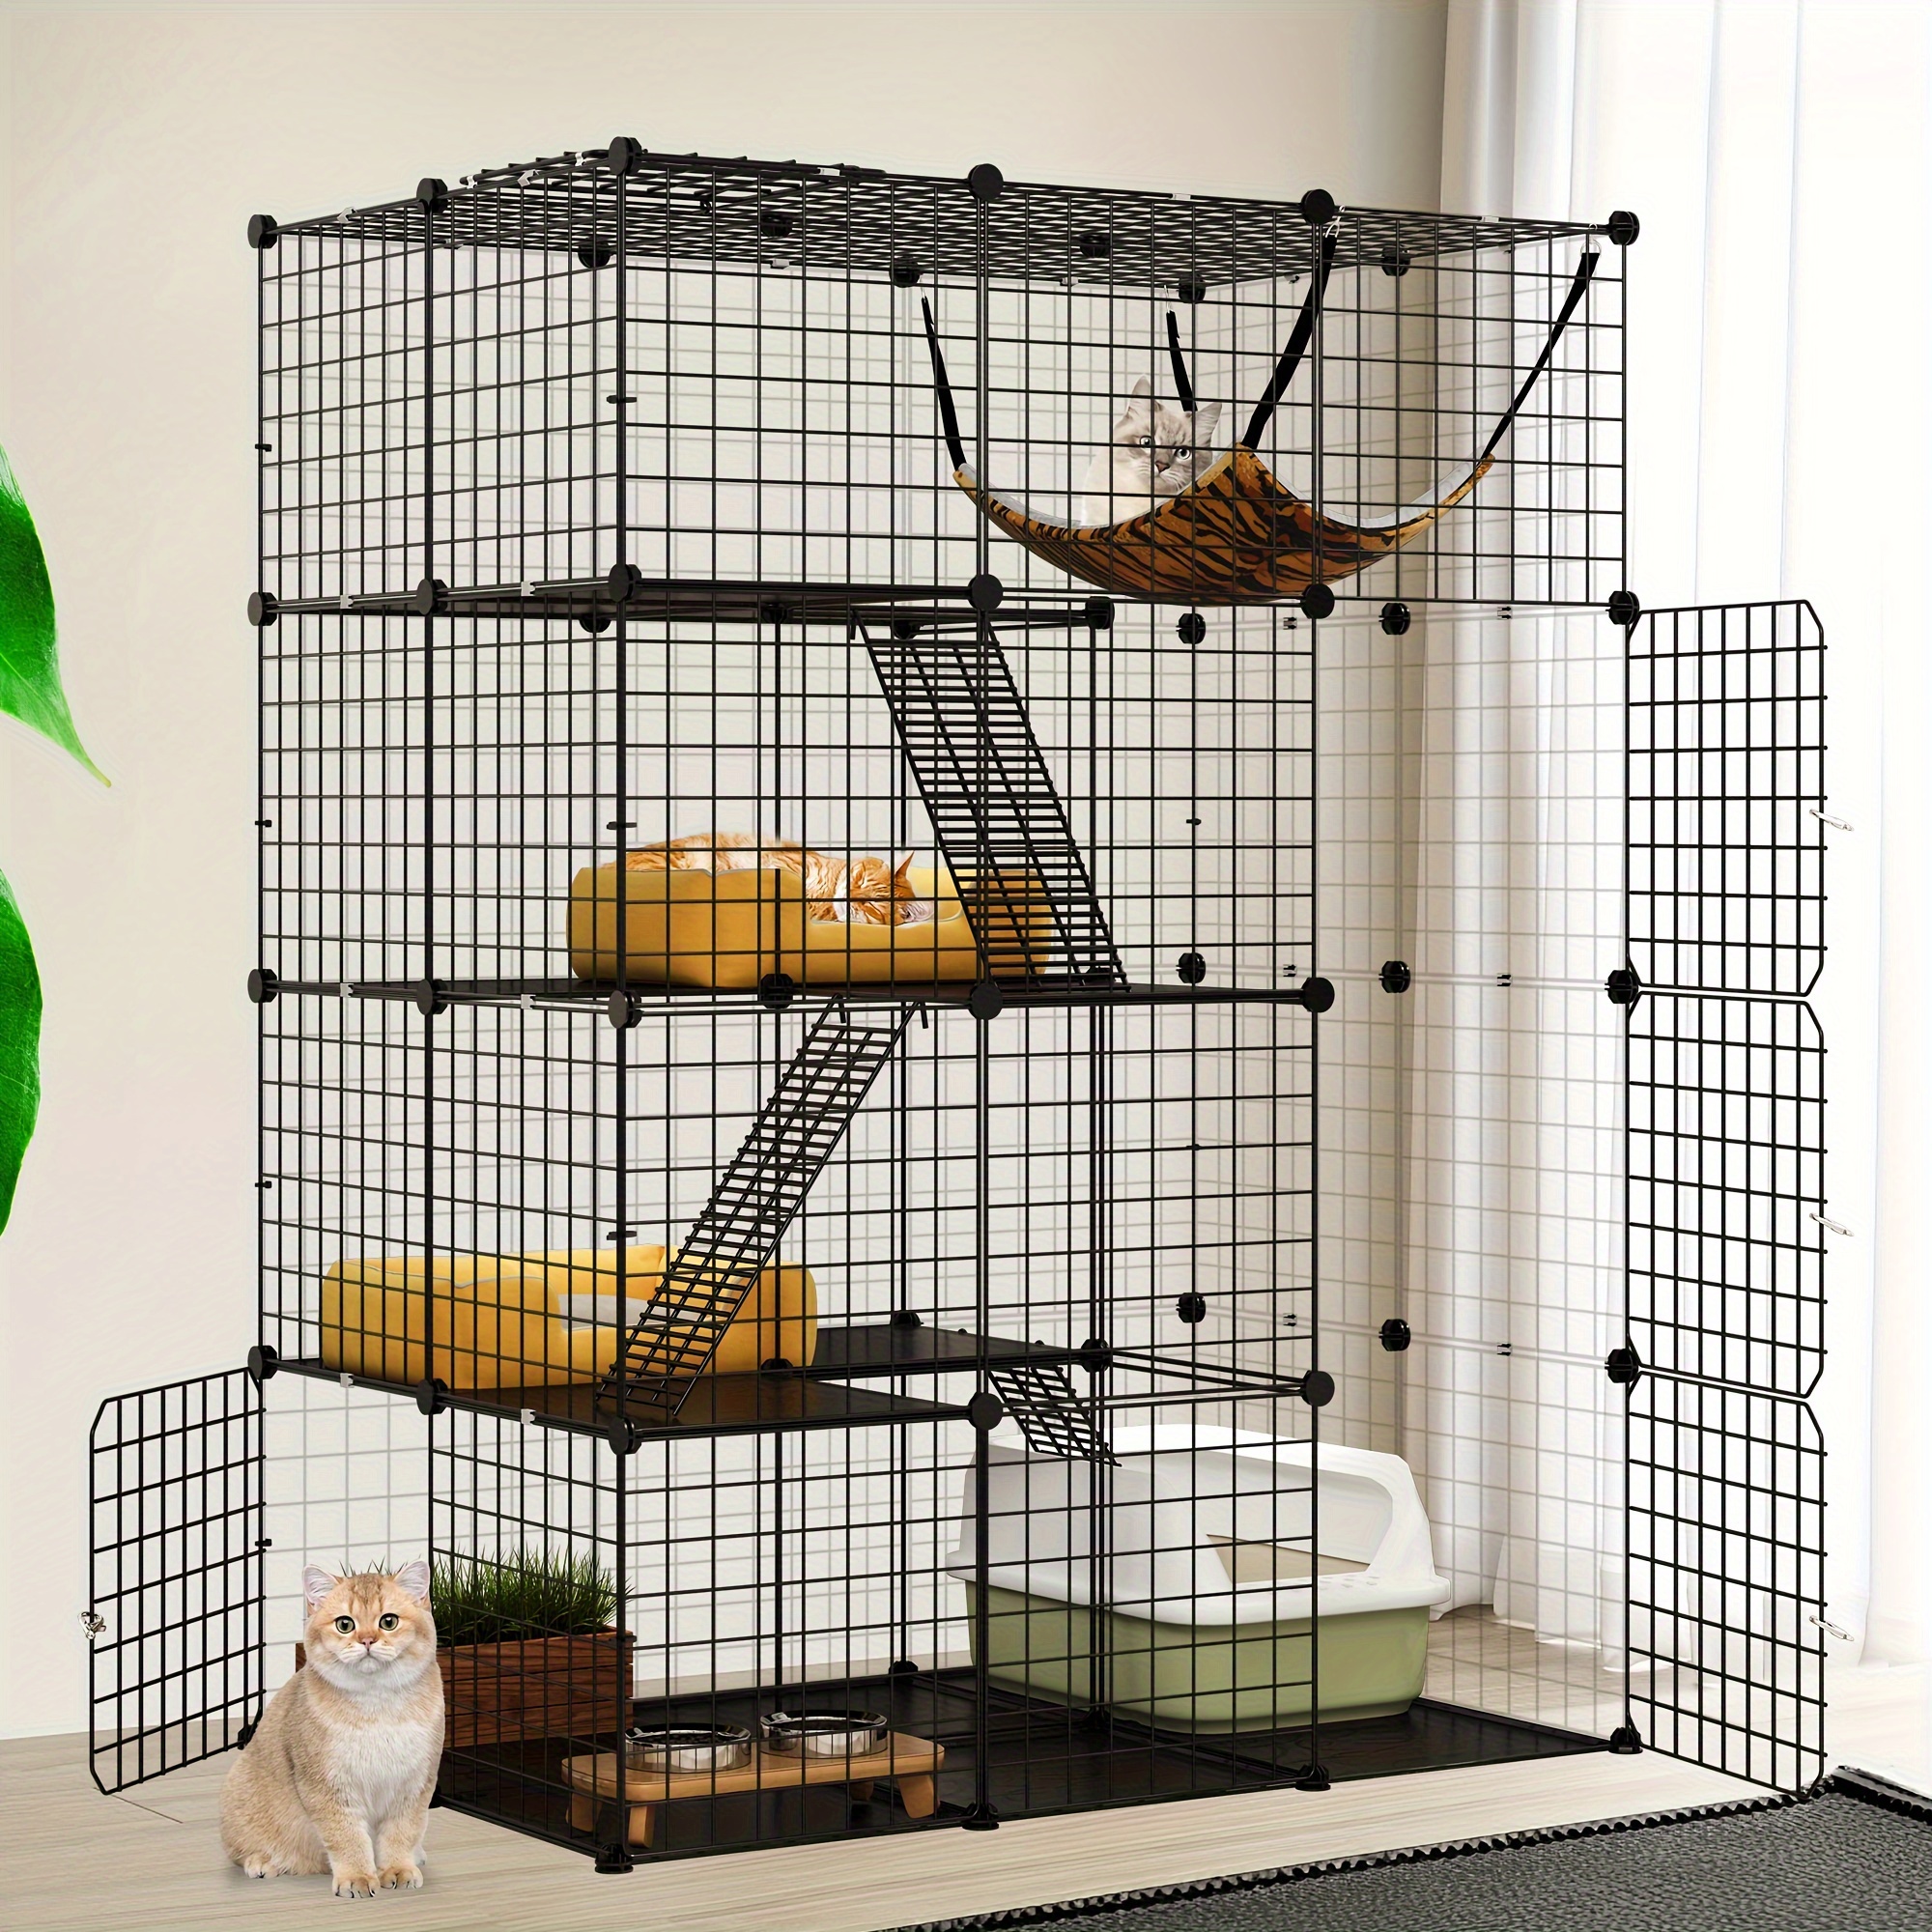 

Balconera 4-tier Indoor Cat Enclosure With Hammock - Large Metal Wire Playpen Kennel For 1-3 Cats